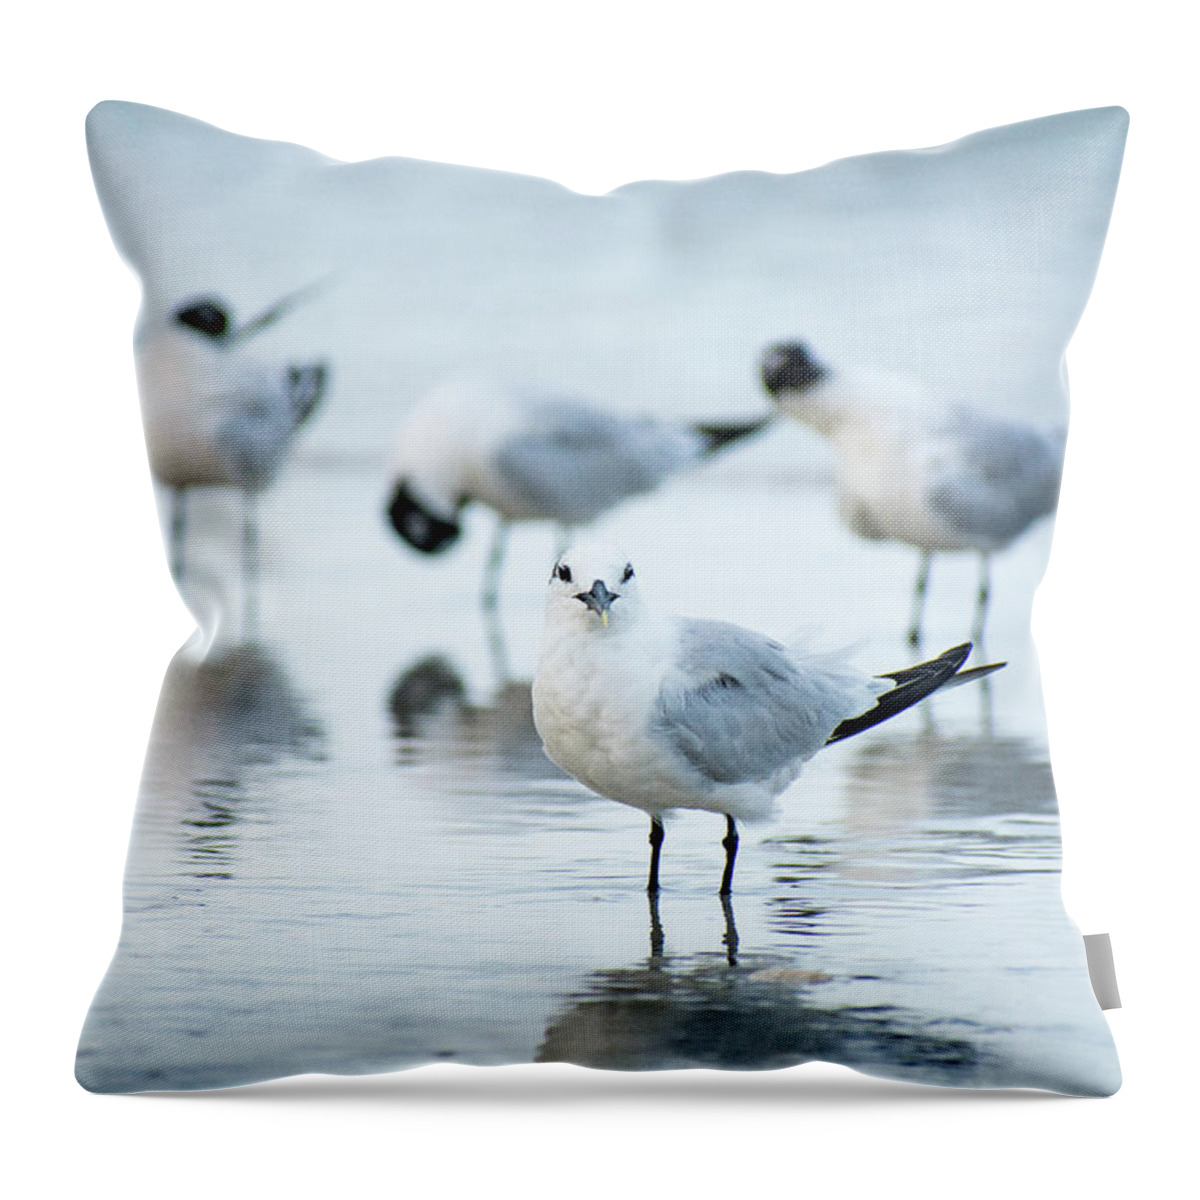 Laughing Gulls Throw Pillow featuring the photograph Gulls by Mary Ann Artz